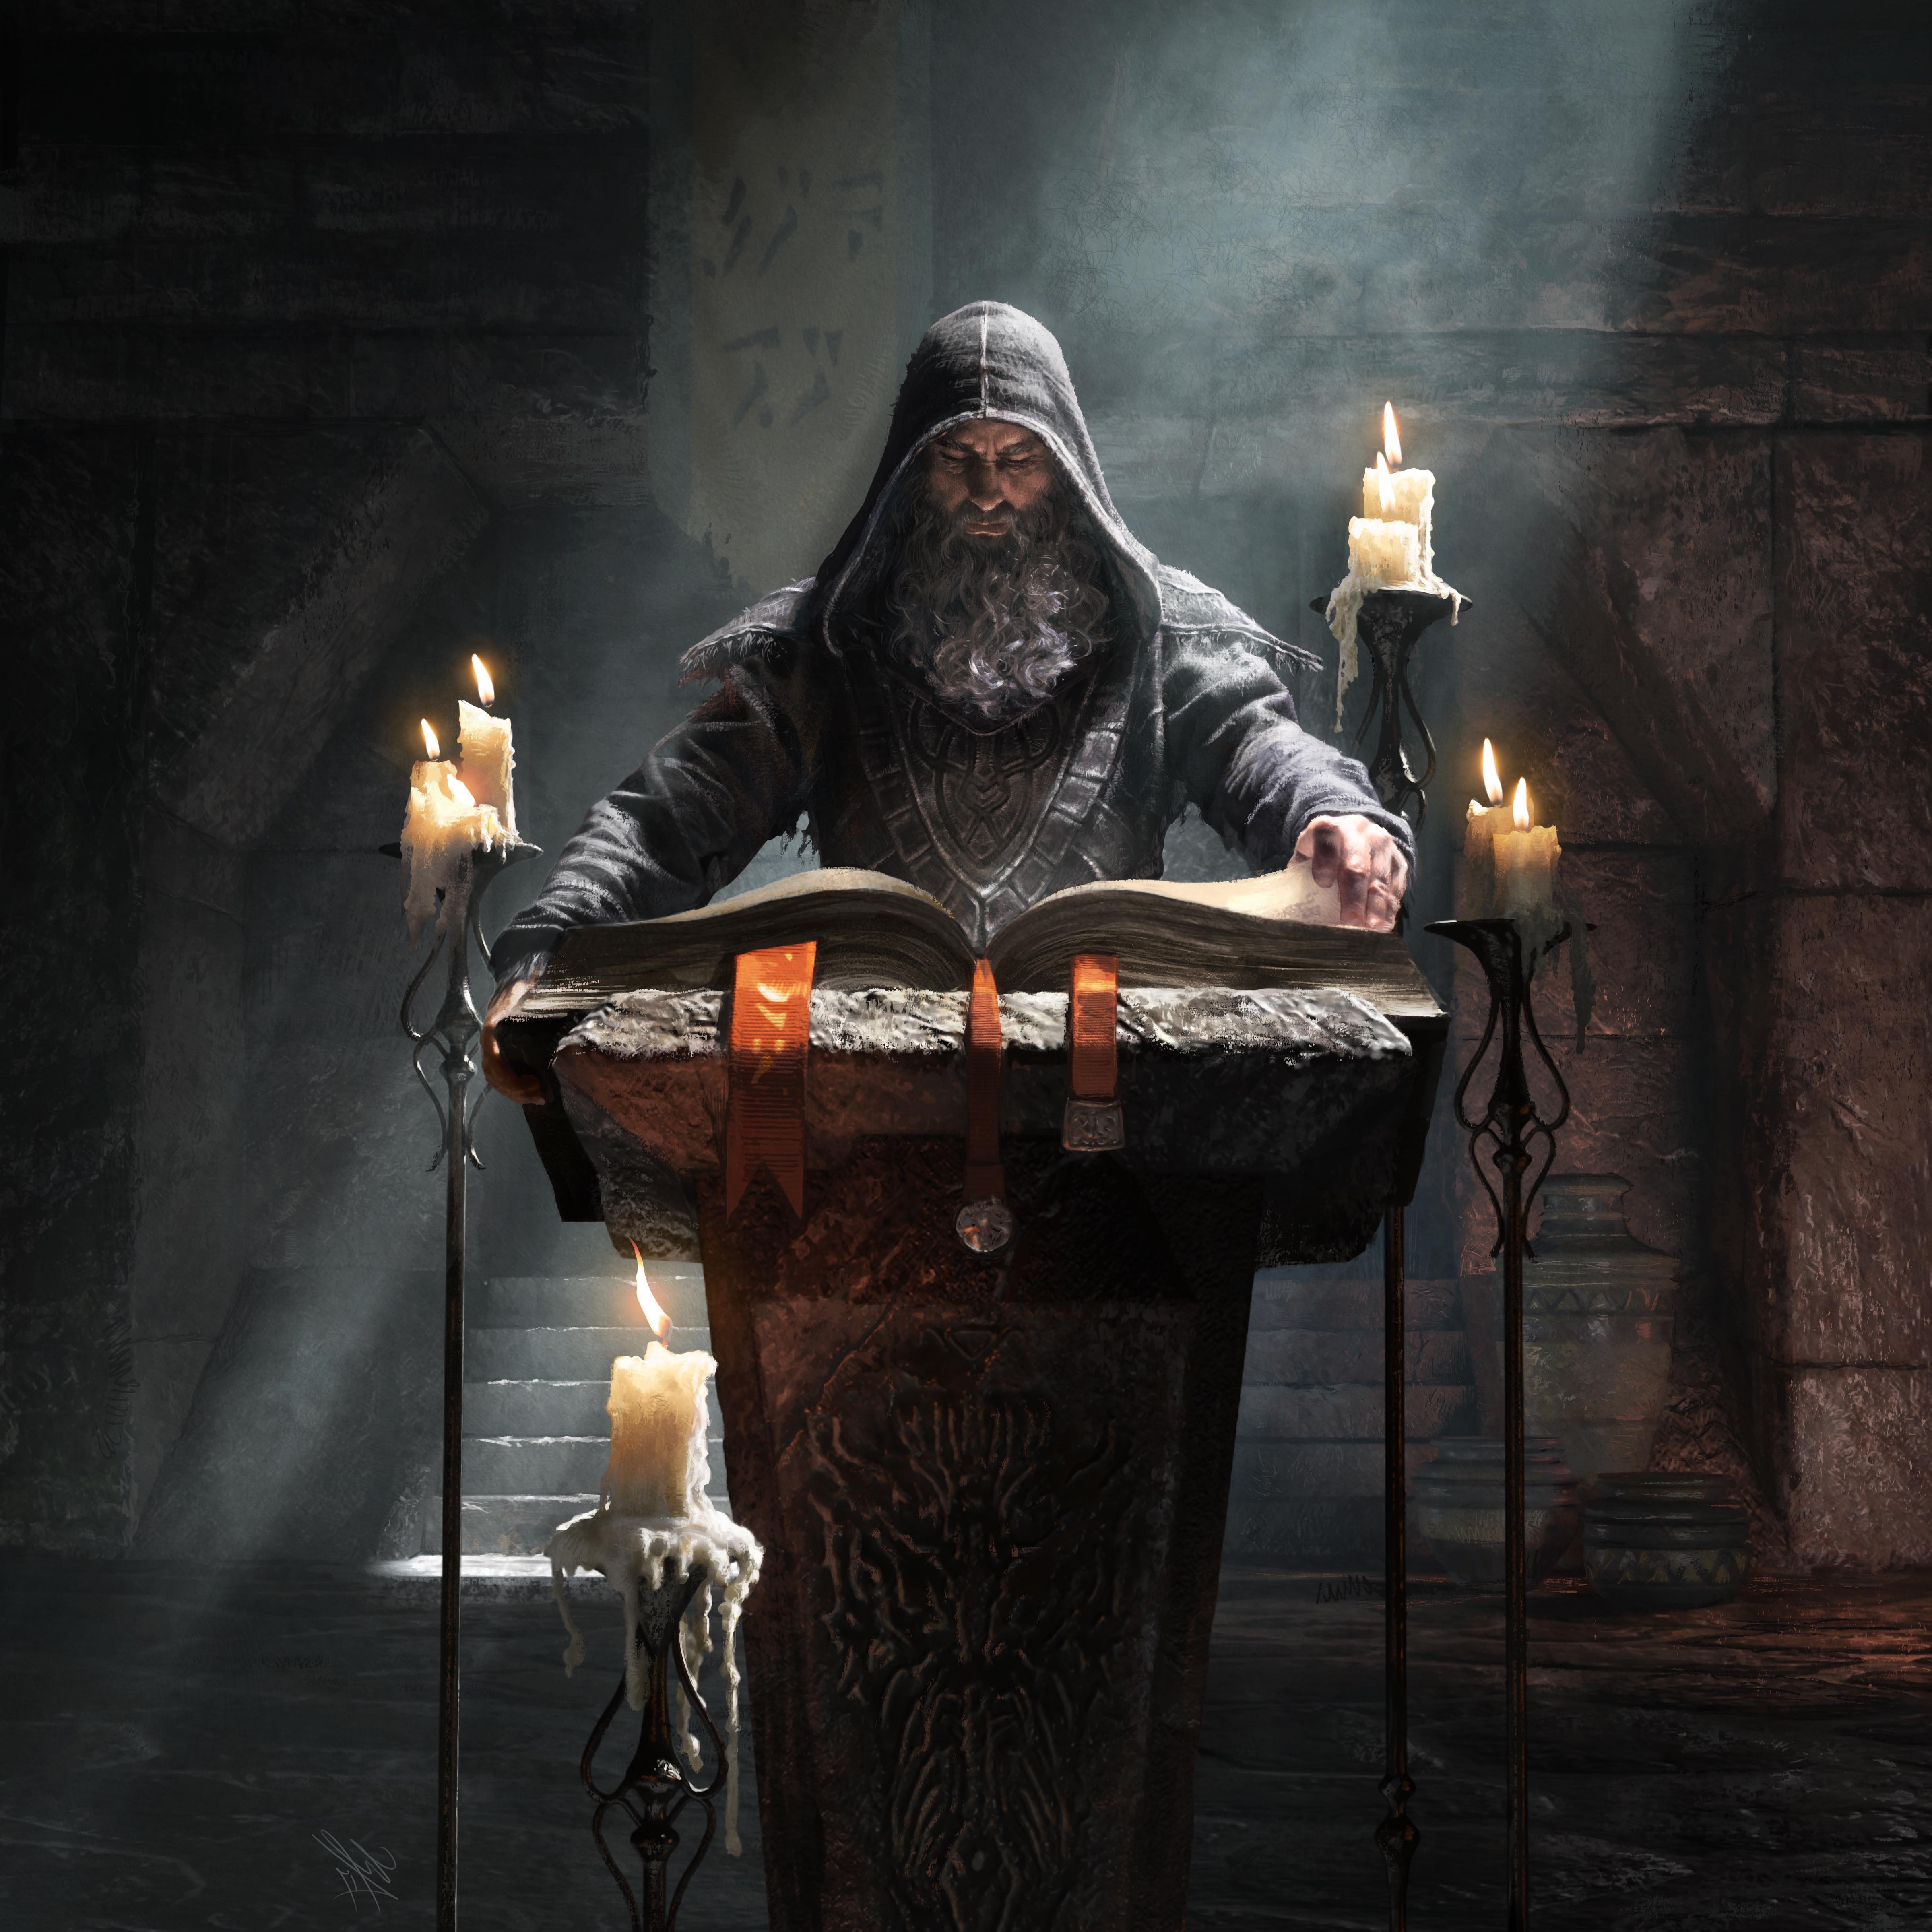 Artwork Wizard The Elder Scrolls Legends The Elder Scrolls Reading Books Candles Frontal View Sunlig 4800x4800